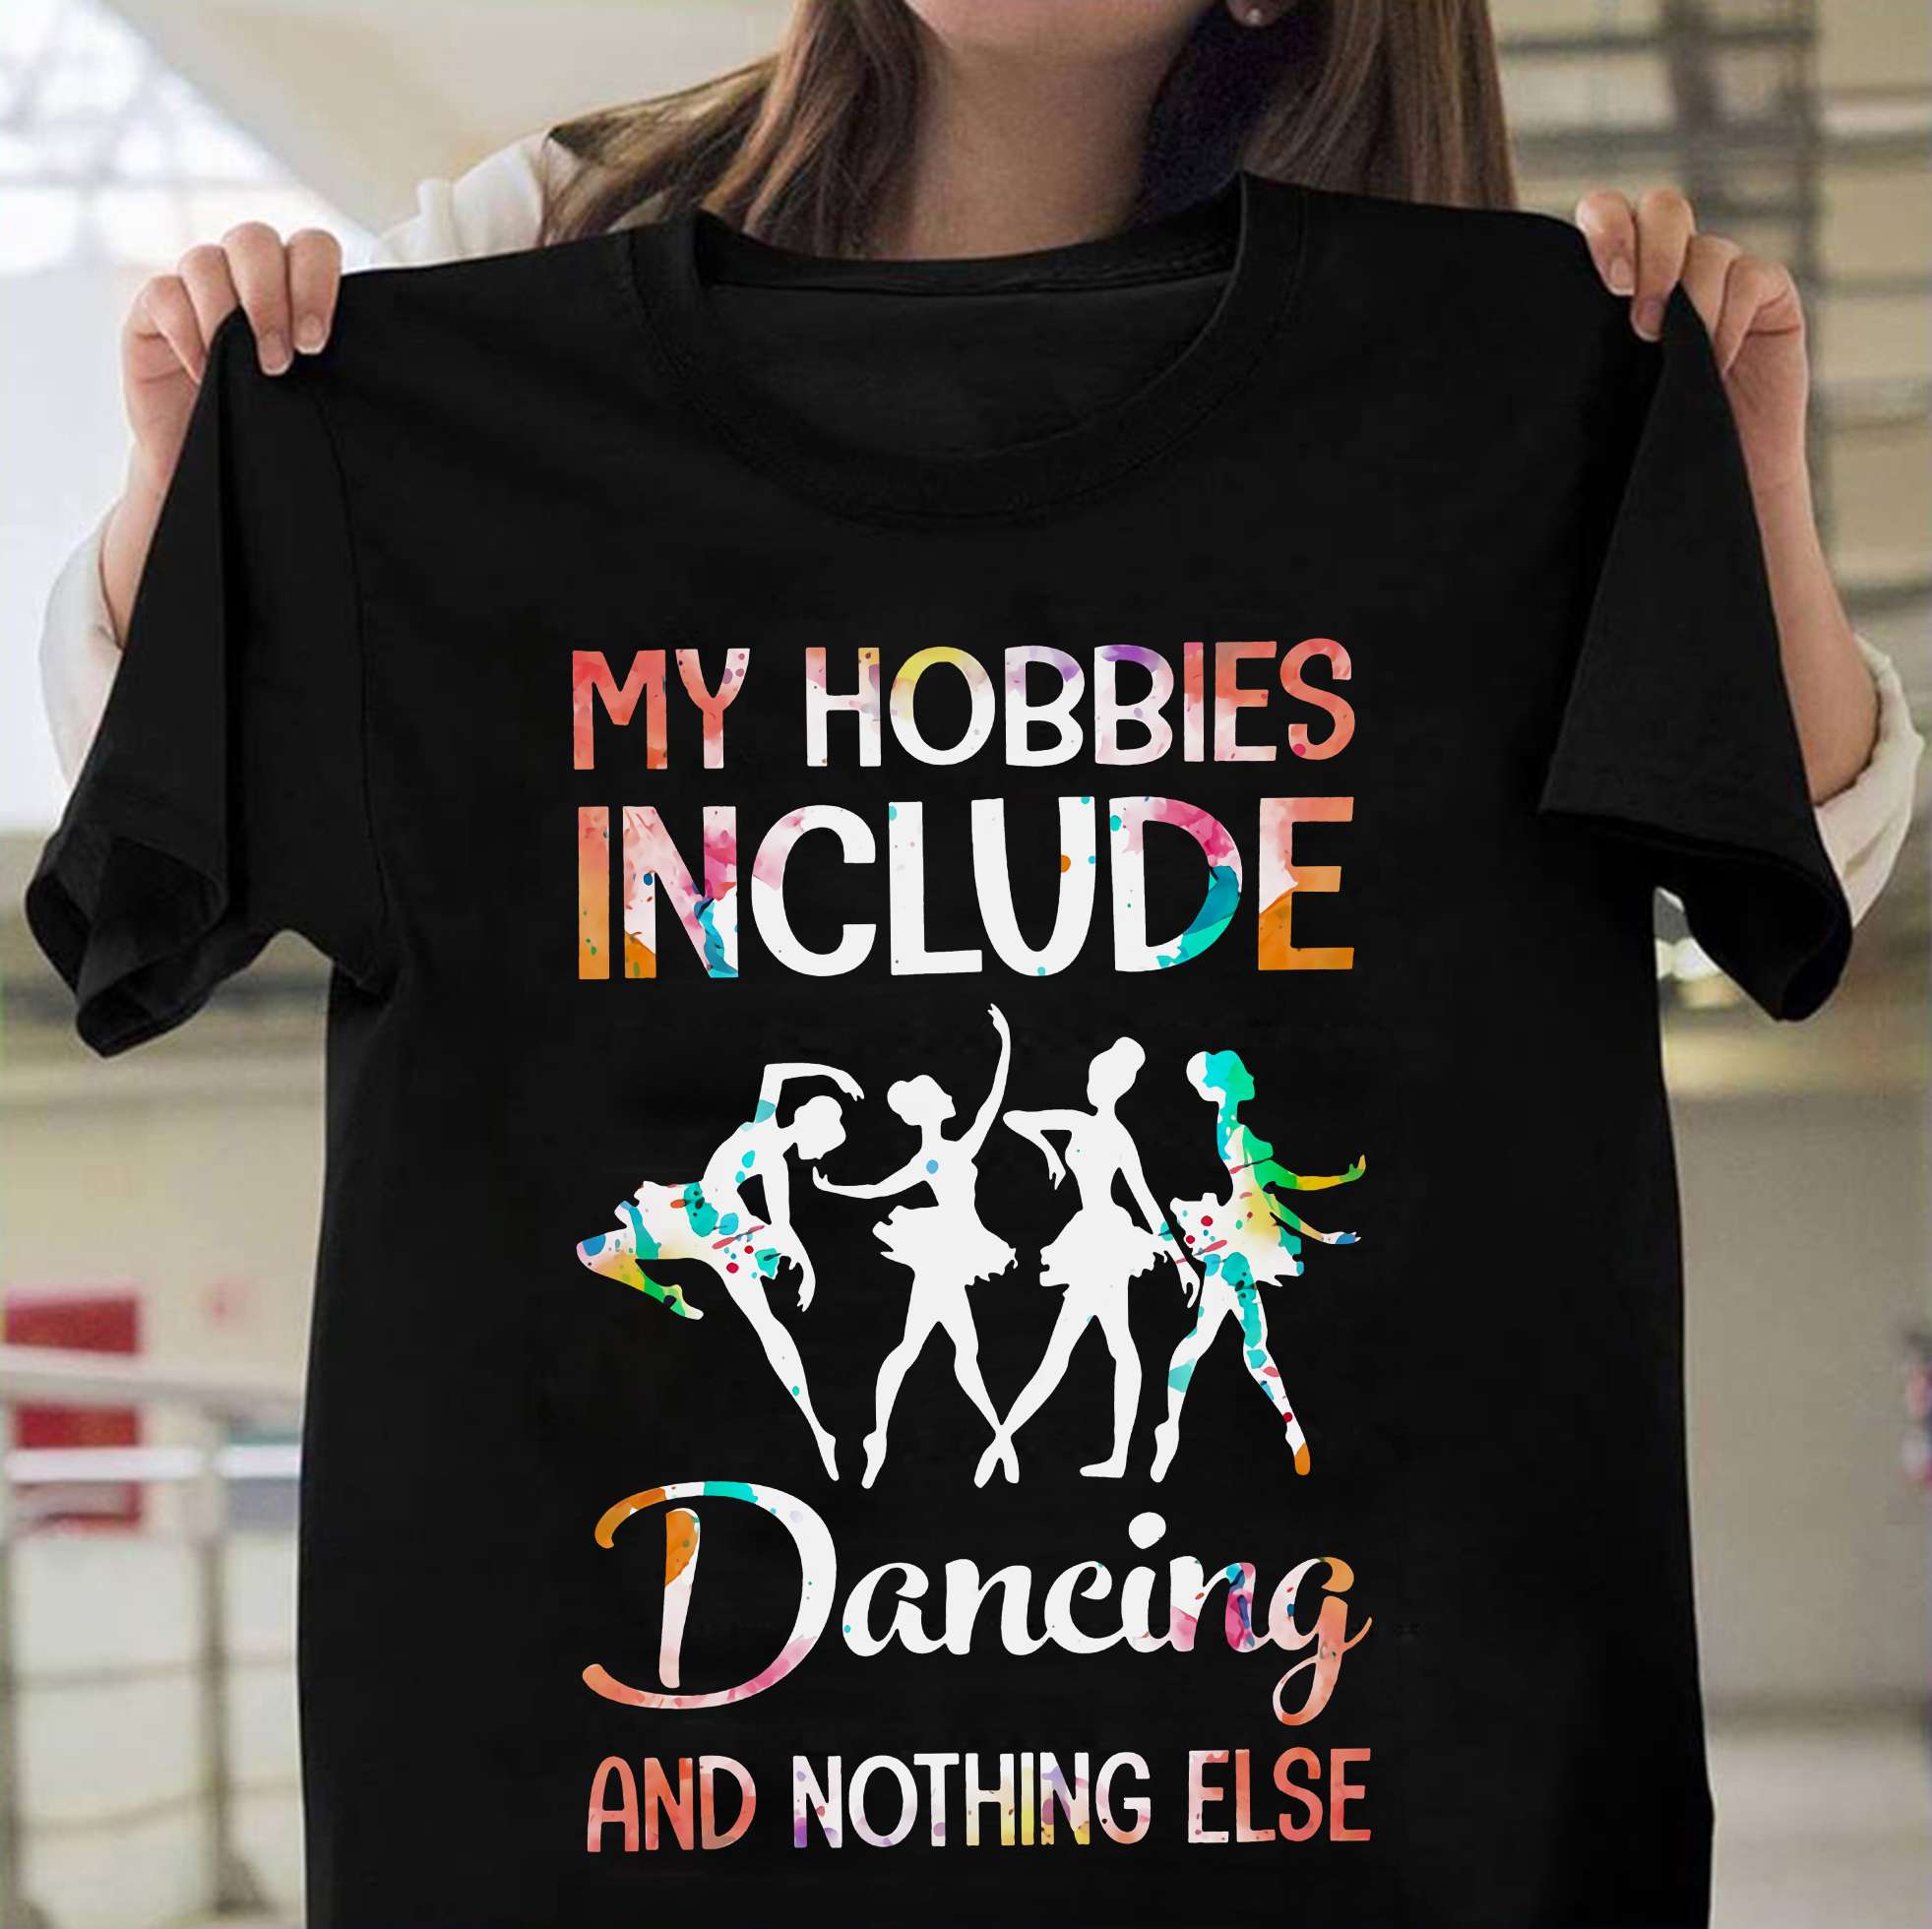 Ballet Dancing, T-shirt for ballerina - My hobbies include dancing and nothing else